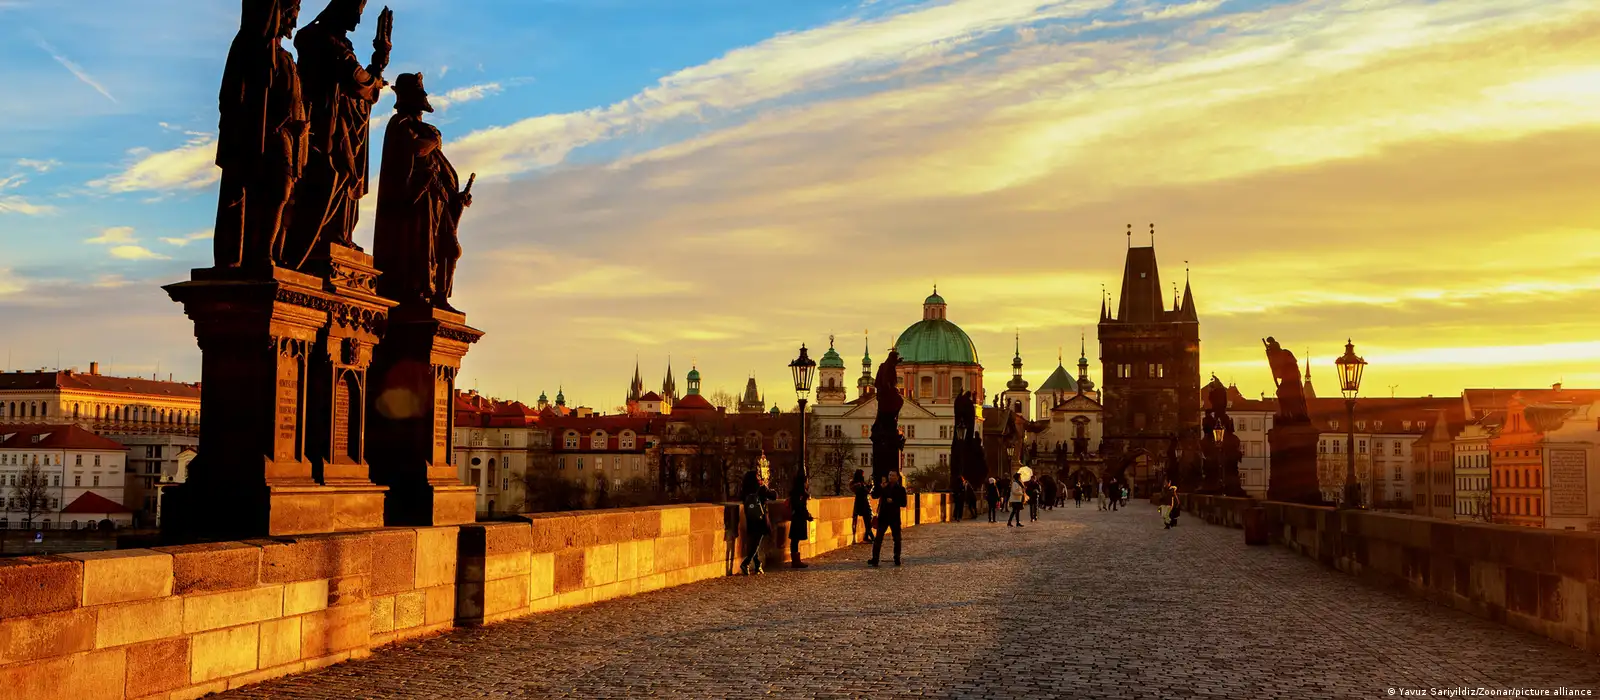 As tourists return, Prague's high end retailers rejoice